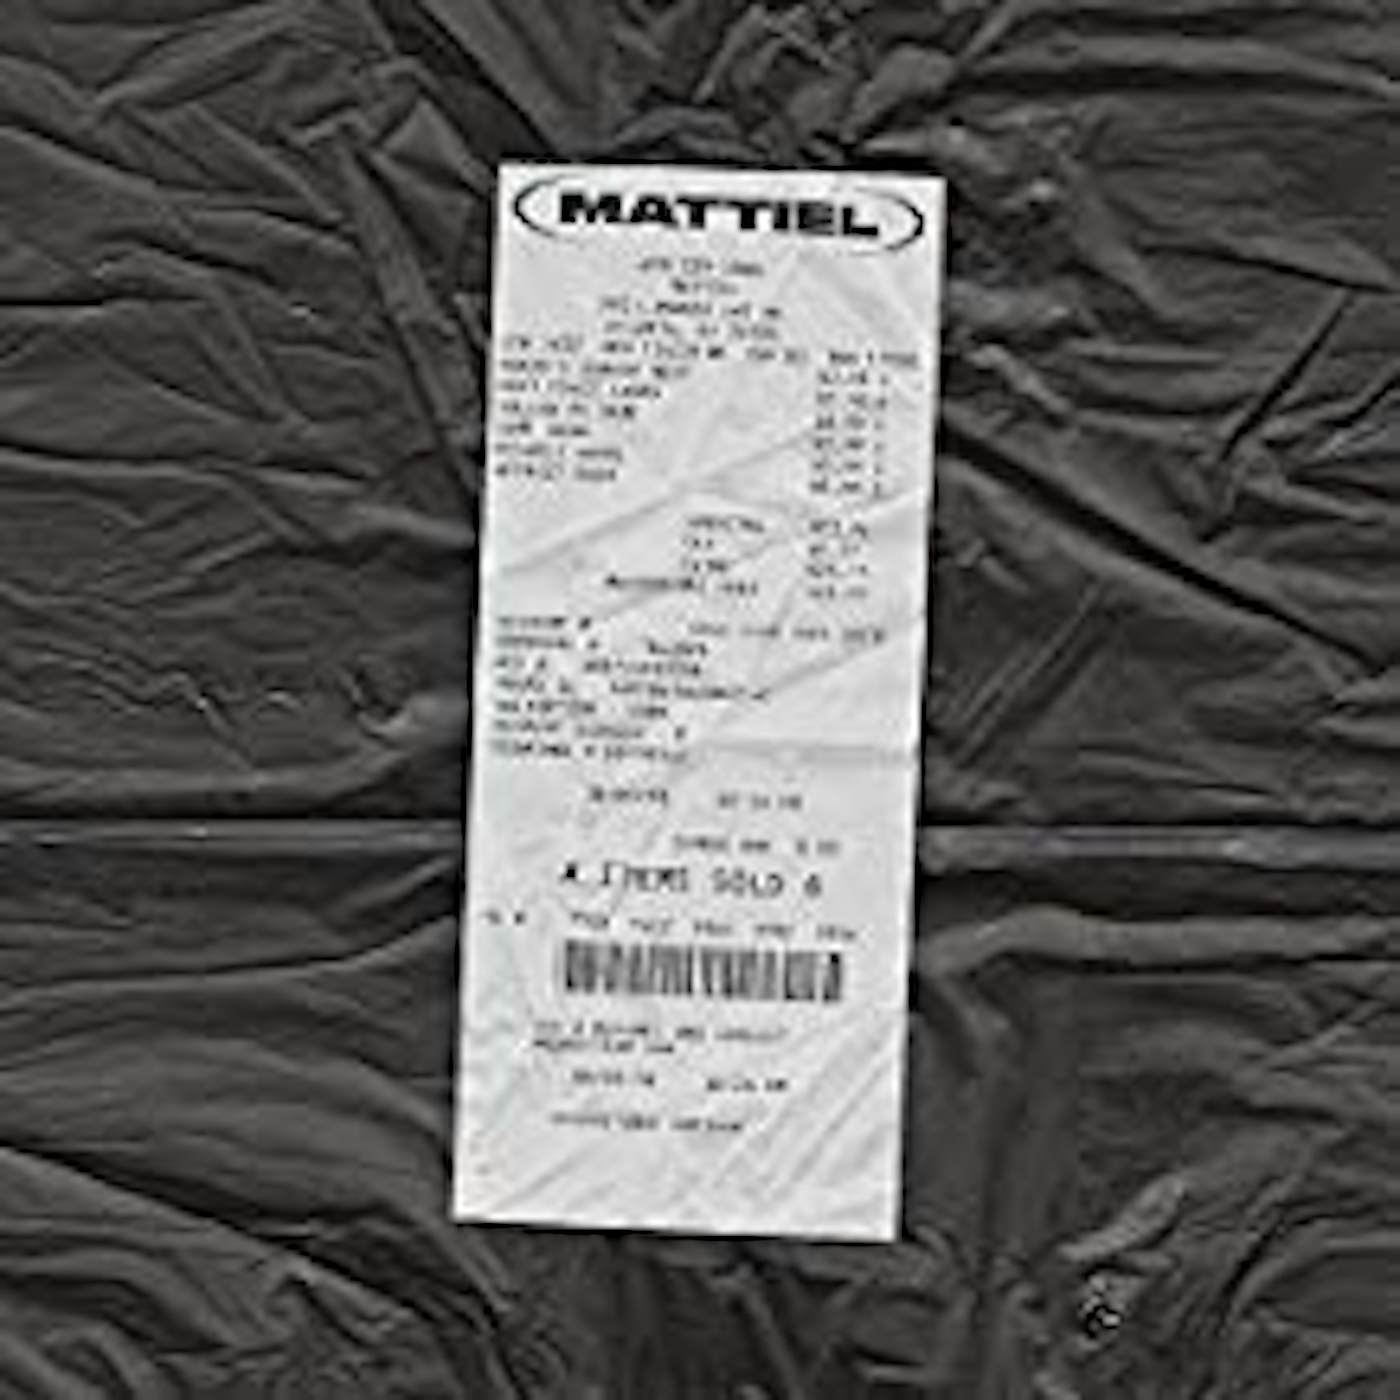 Mattiel Customer Copy Vinyl Record